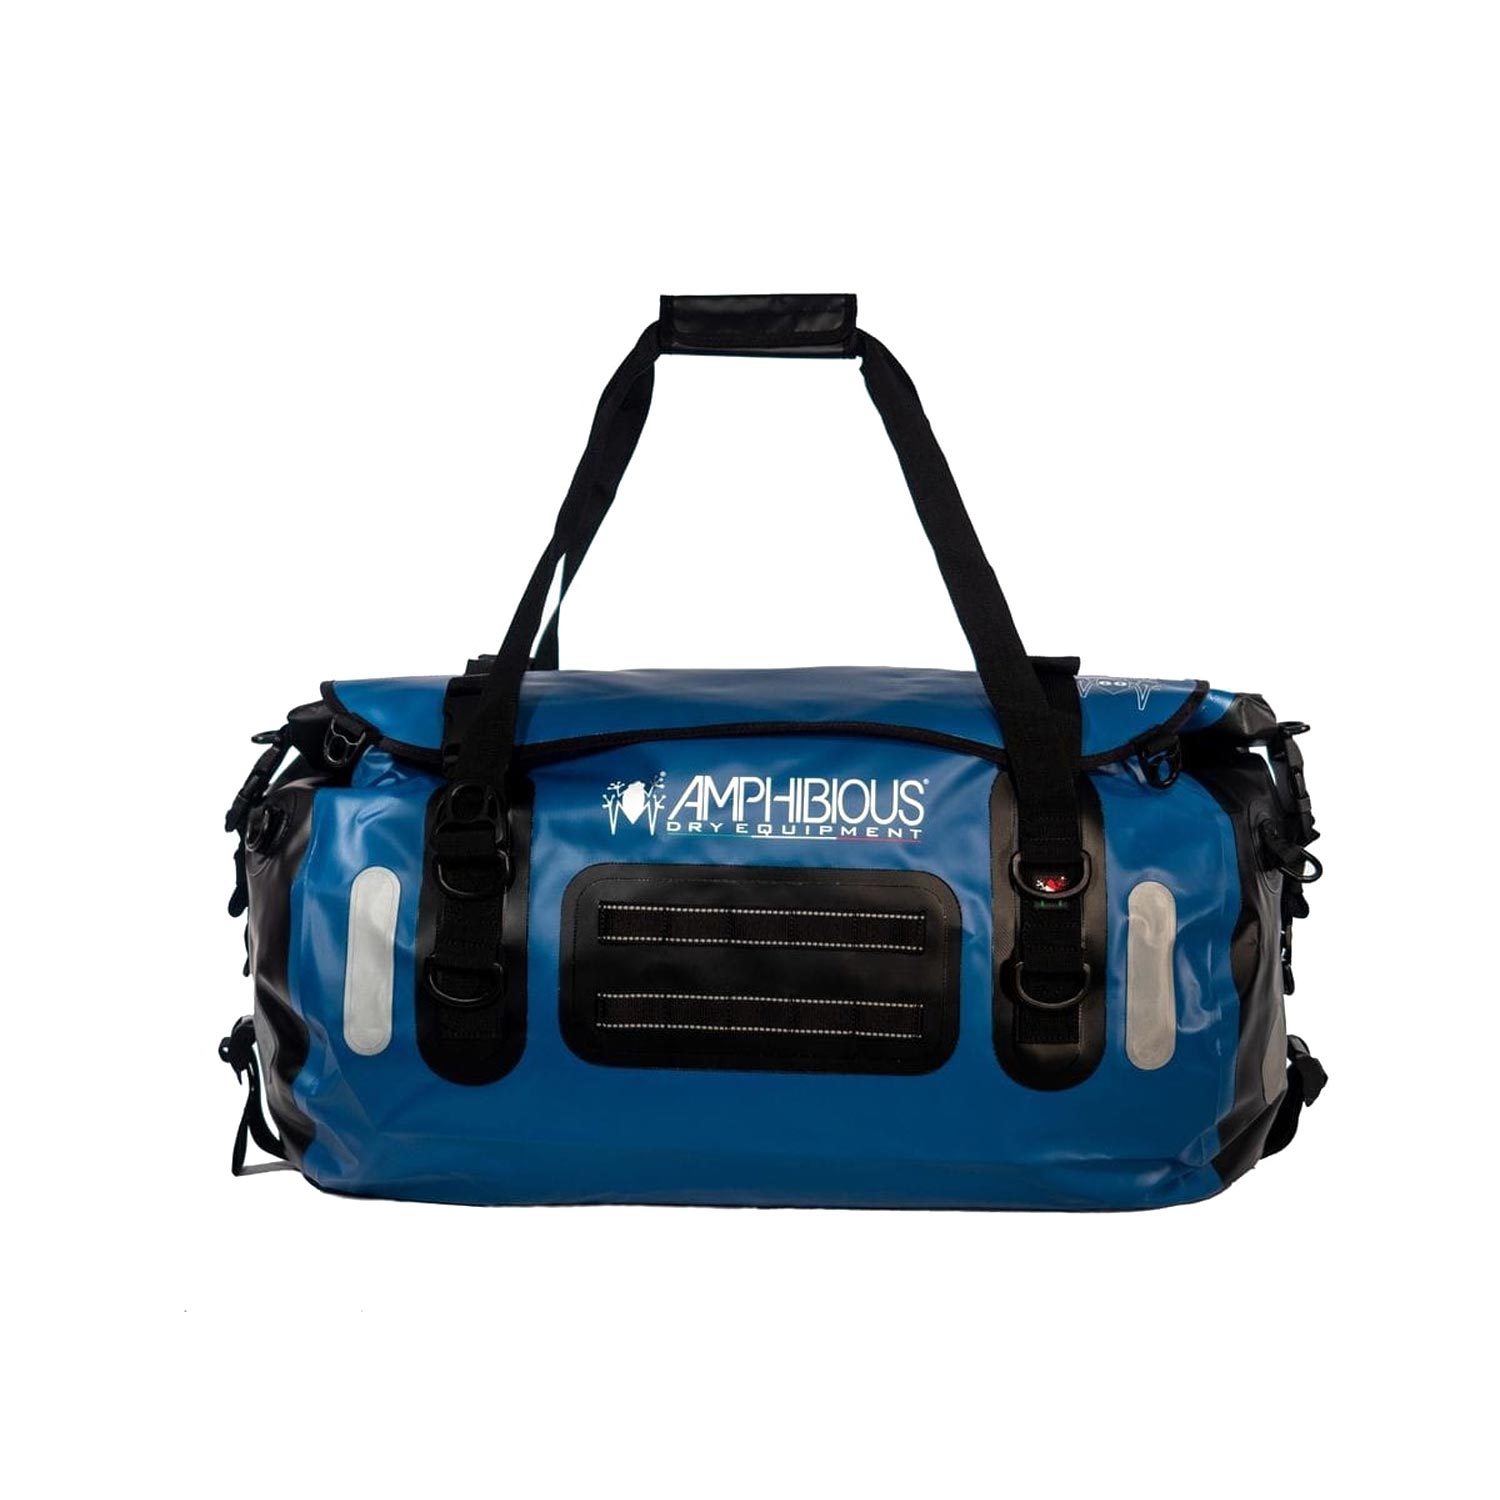 Amphibious Italy VOYAGER II 60 Waterproof Bag blue | Accessories ...